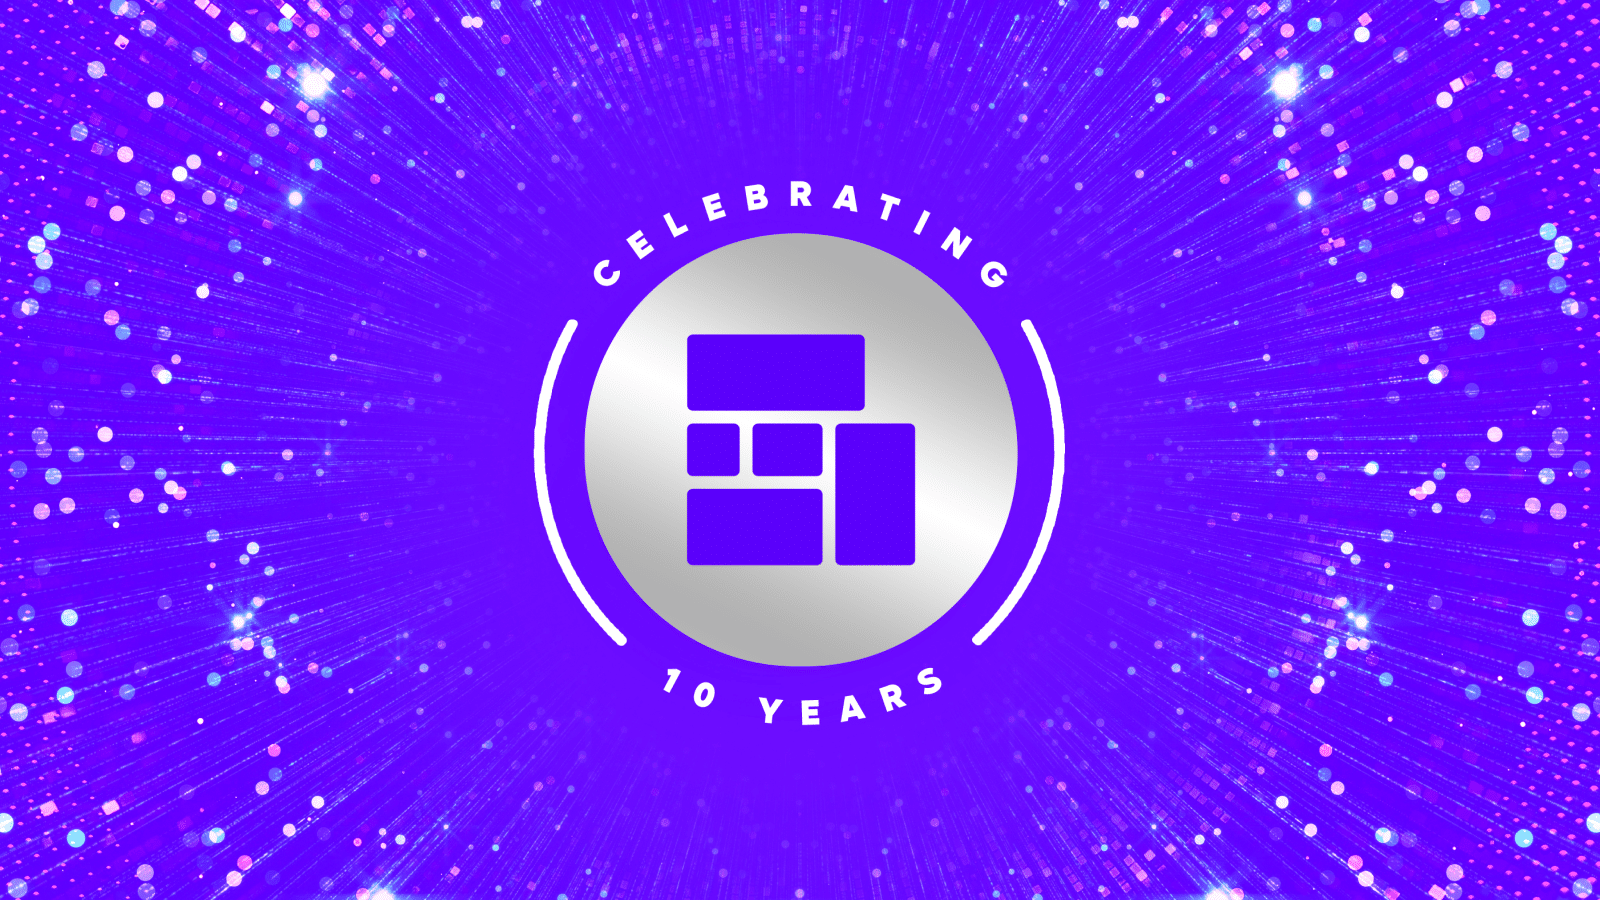 We're celebrating 10 years of Grabyo!